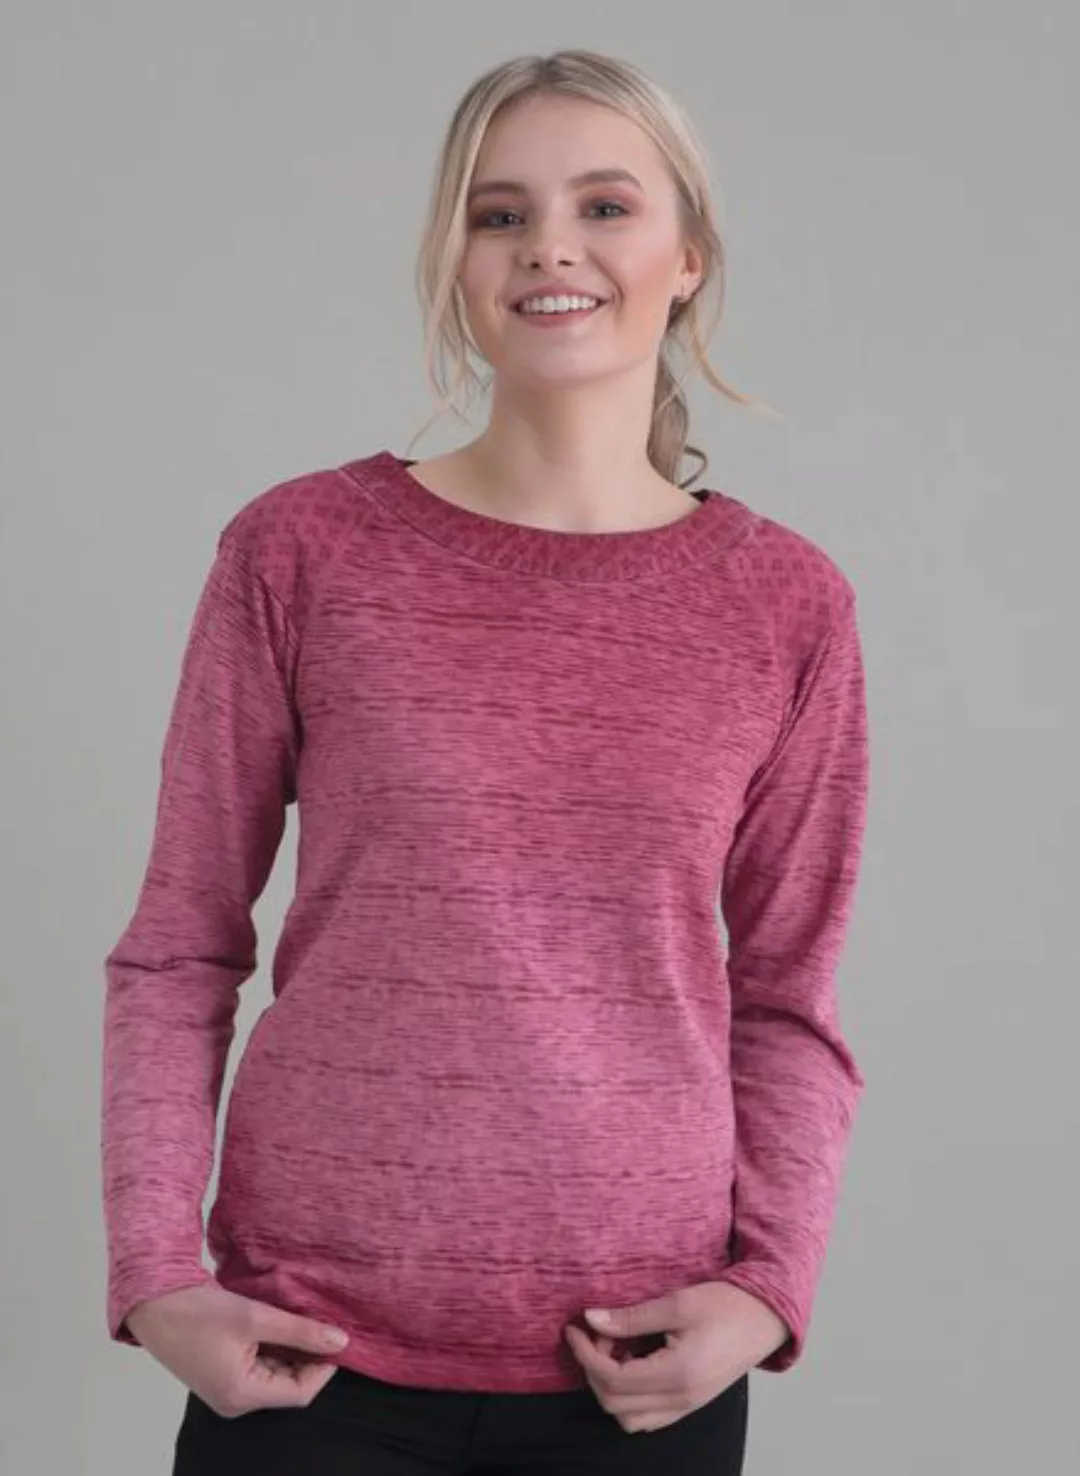 Flammgarnshirt Als Basic In Trendiger Farbe günstig online kaufen